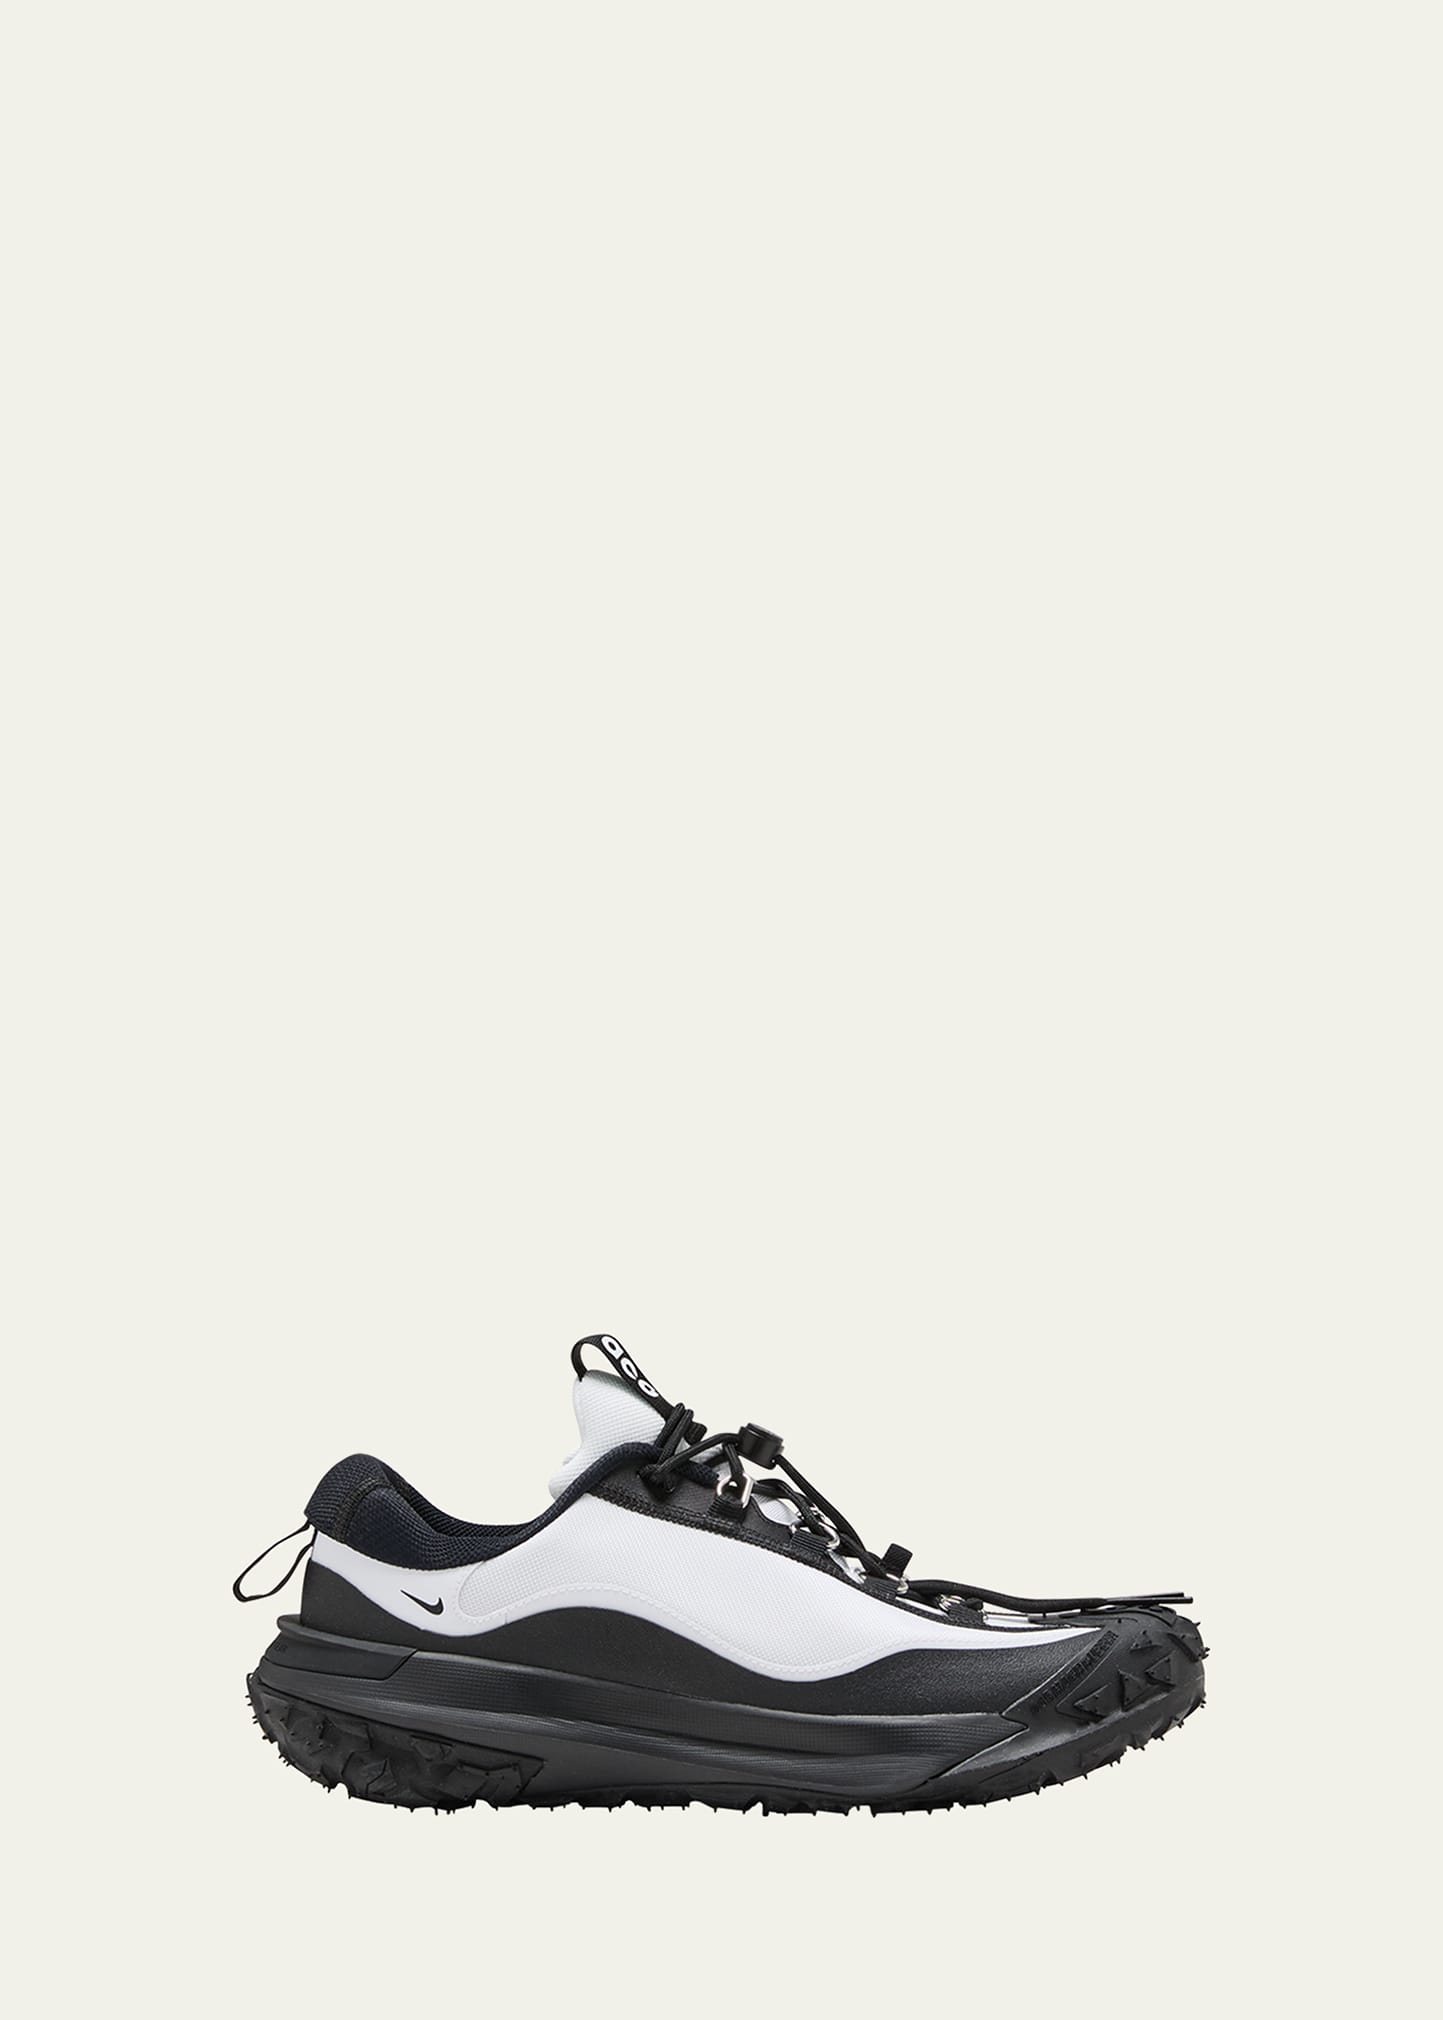 Comme Des Garçons Homme Deux X Nike Men's Acg Mountain Fly 2 Gore-tex Runner Sneakers In Black/white